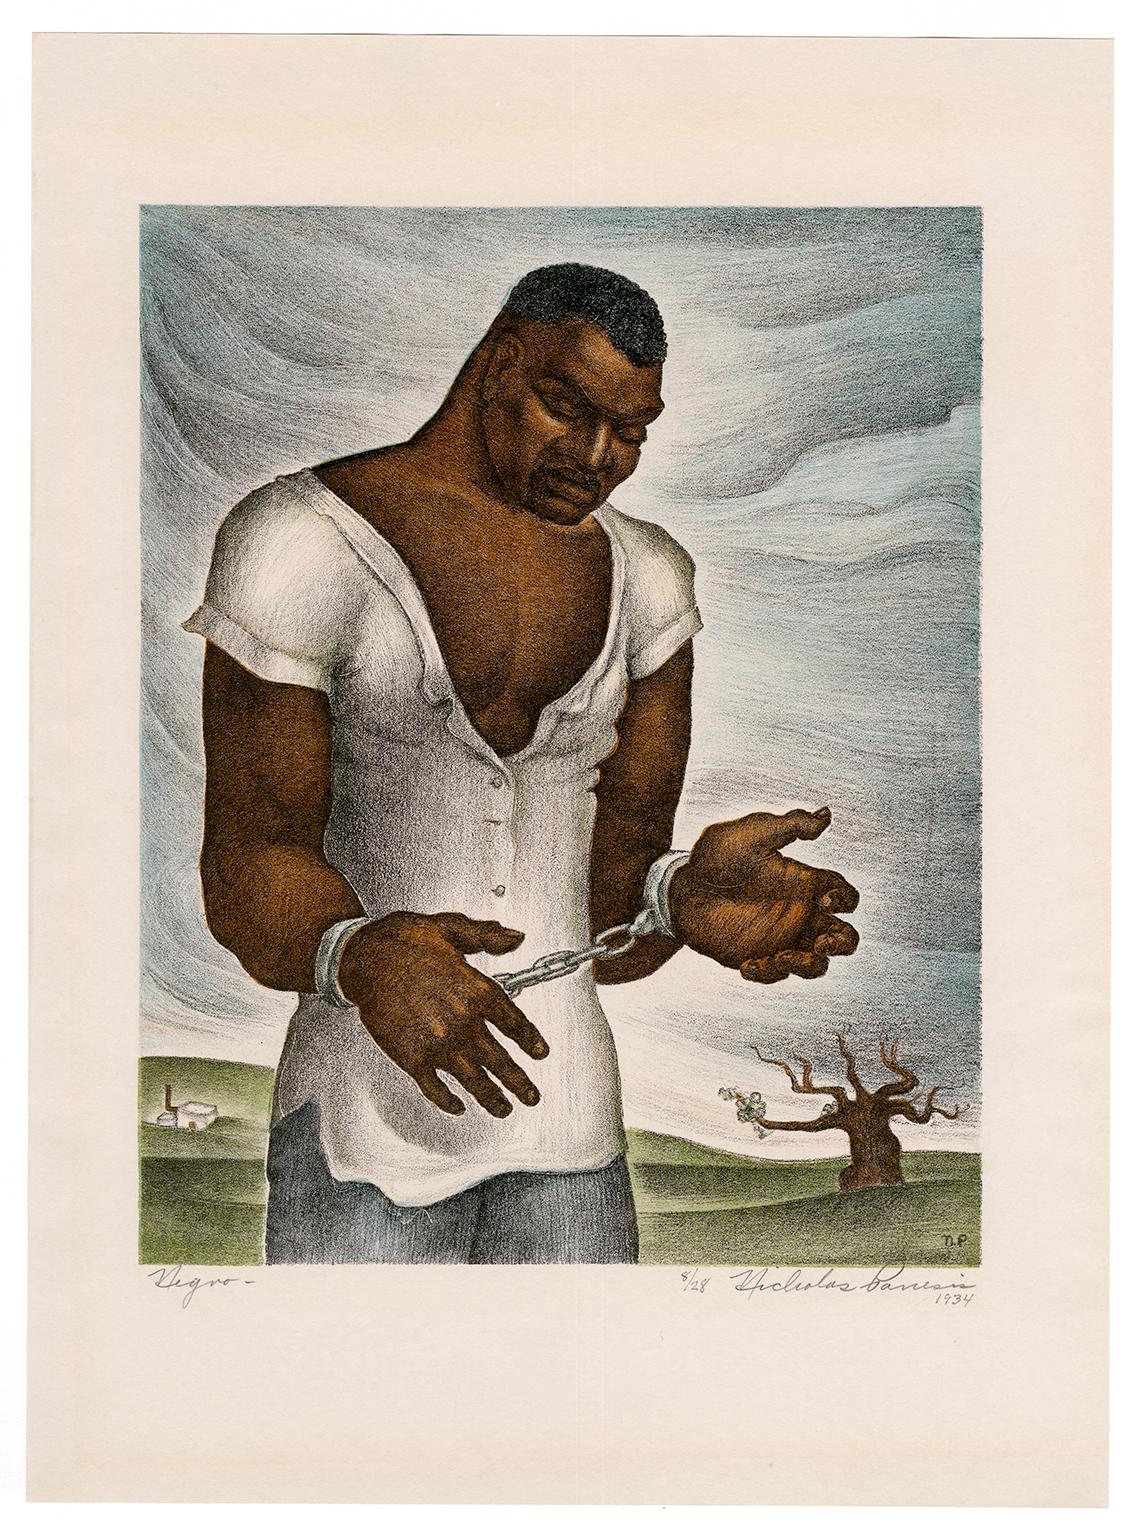 'Negro' — California WPA, 1930s Social Realism – African American Subject - Print by Nicholas Panesis